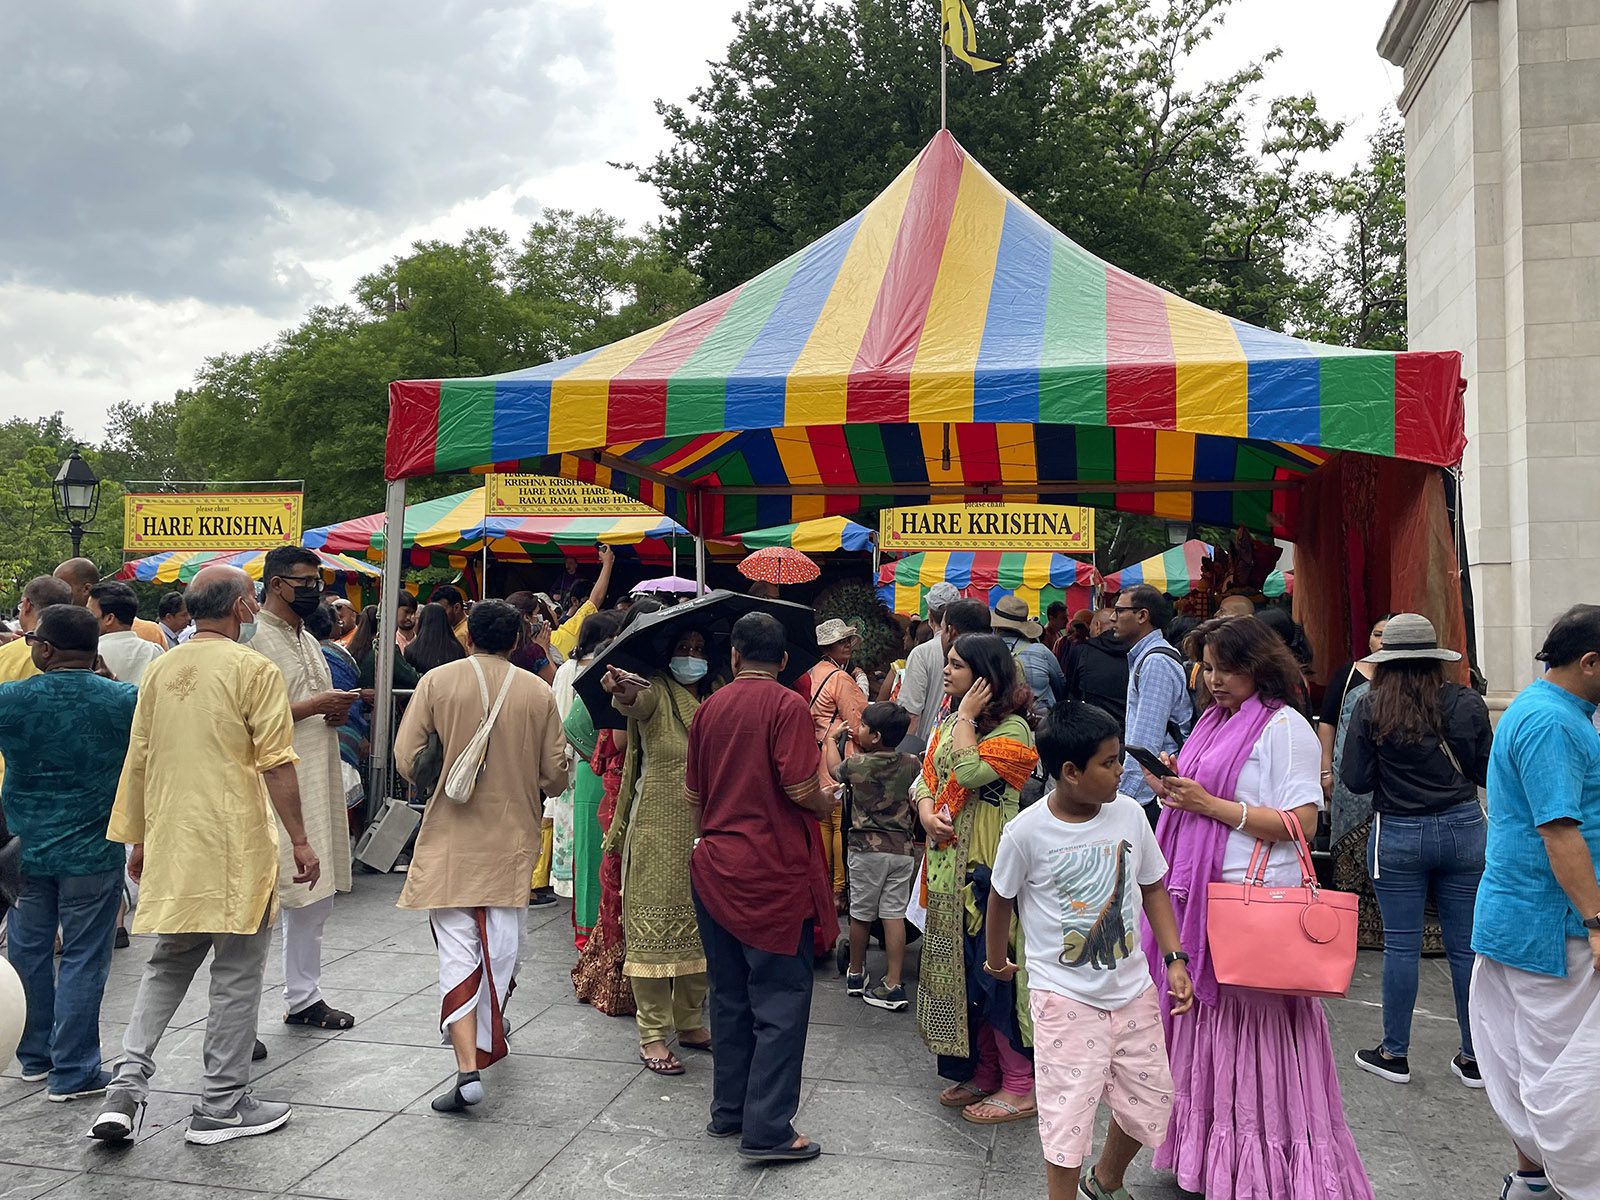 People attend the Hare Krishna Festival at Washington Square Park on June 11, 2022, in Manhattan, New York. RNS photo by Richa Karmarkar